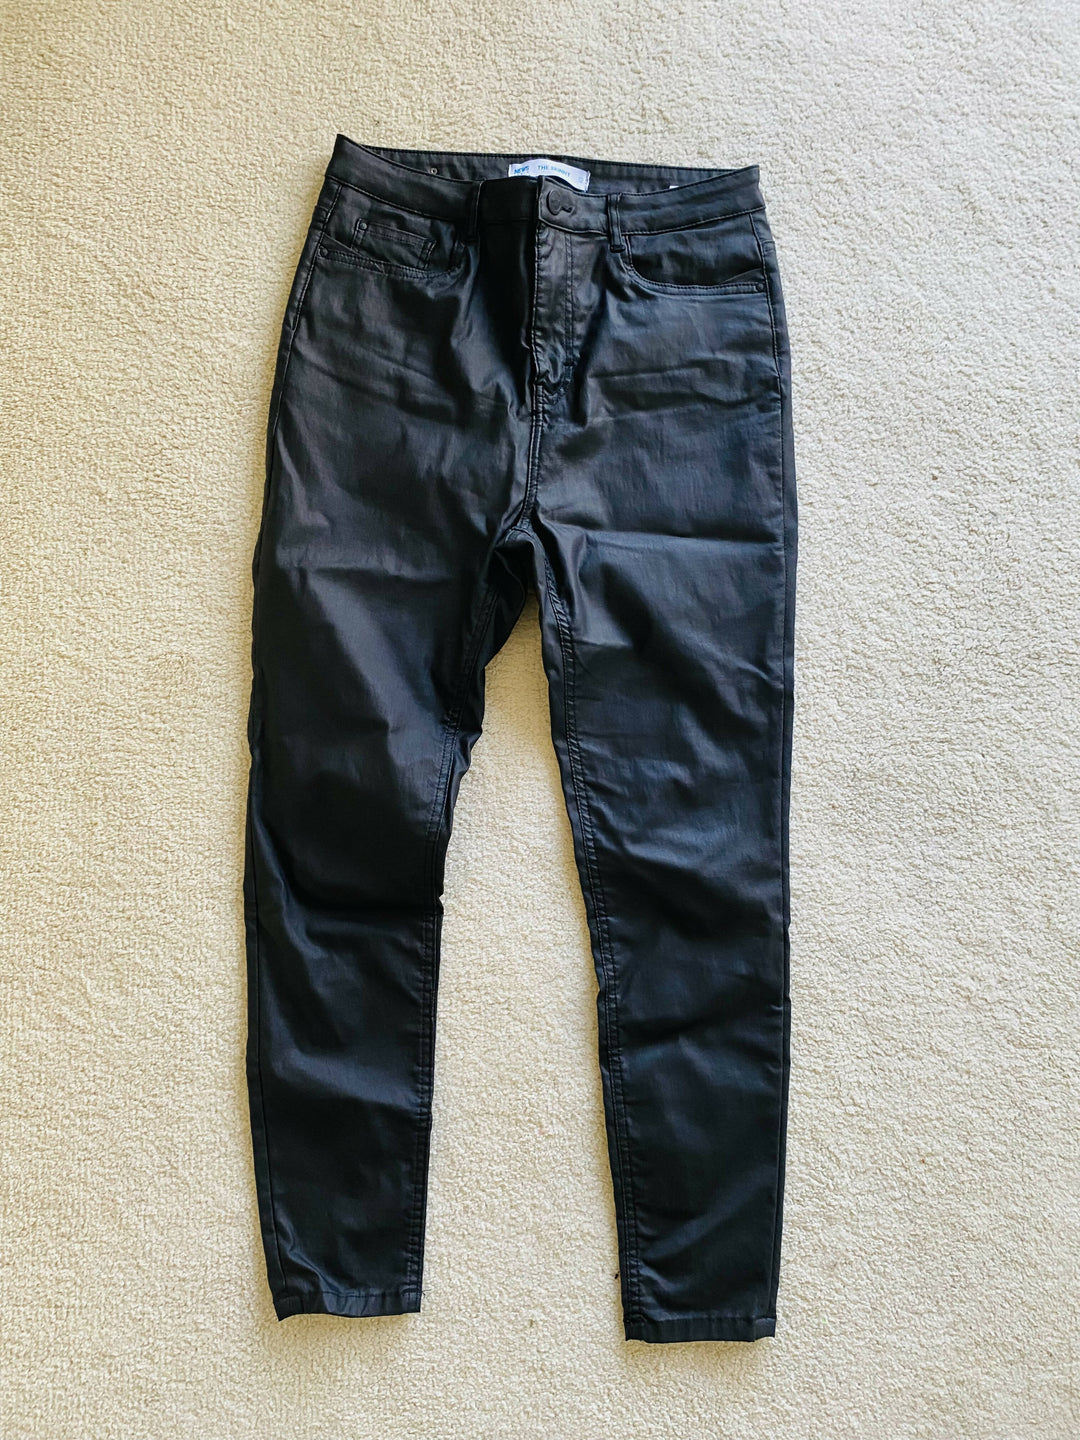 Image of Foschini Black Stretchy Skinny Jeans